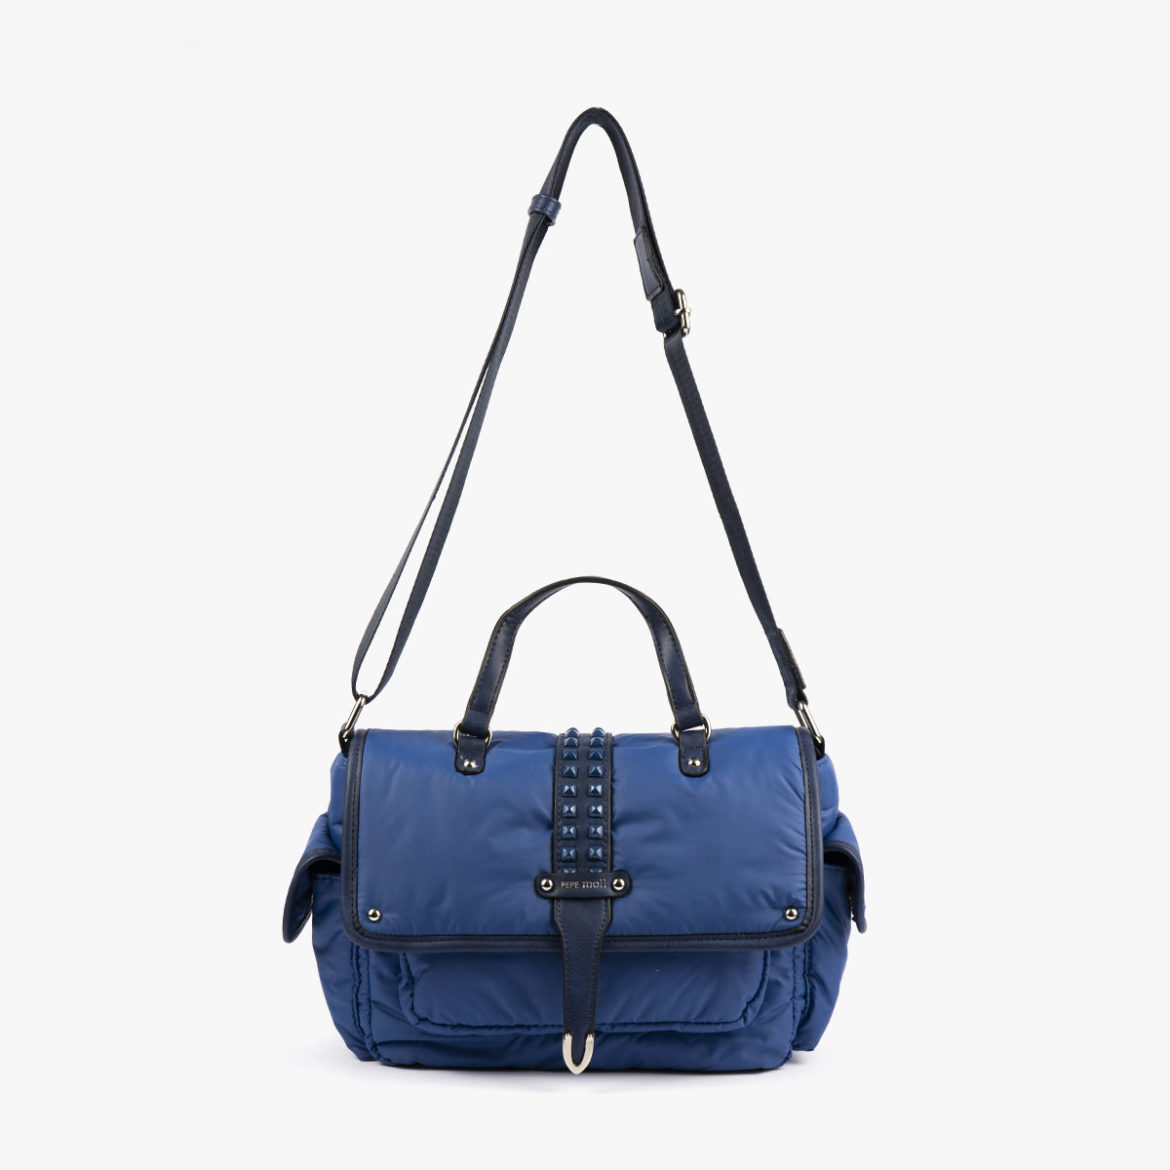 20126 bolso mochila azul pepemoll